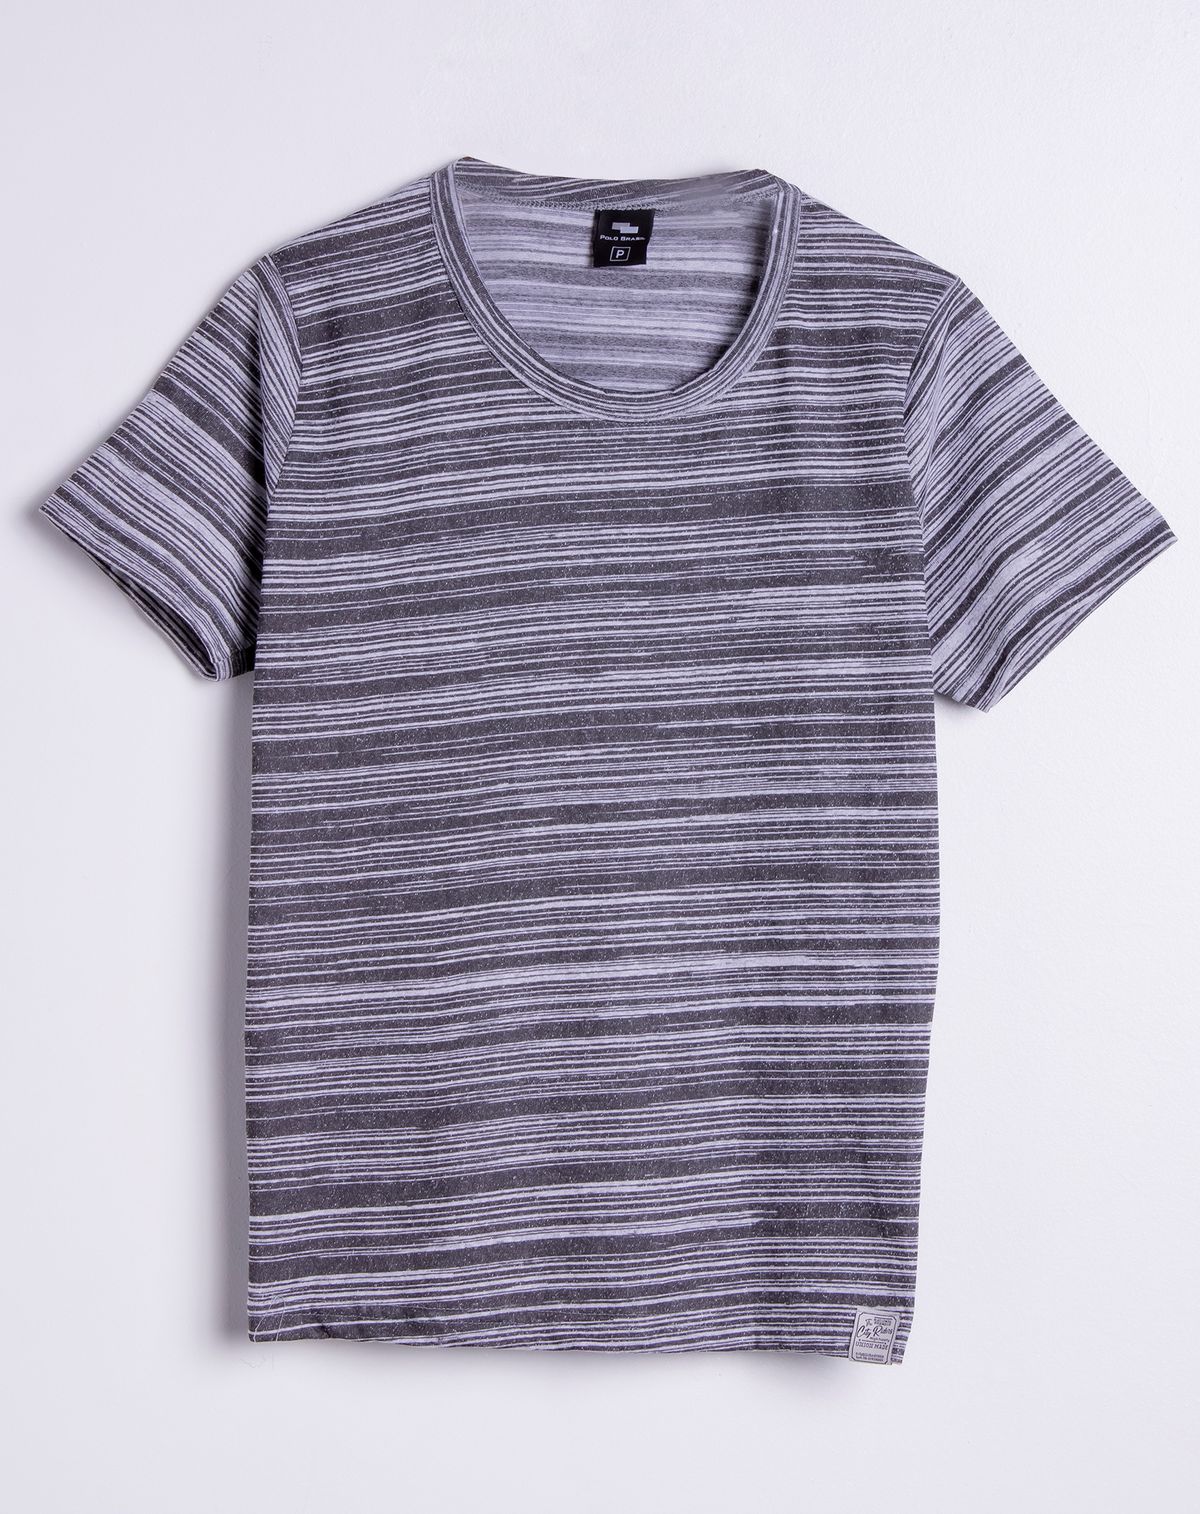 611325007-camiseta-masculina-manga-curta-listrada-preto-g-176